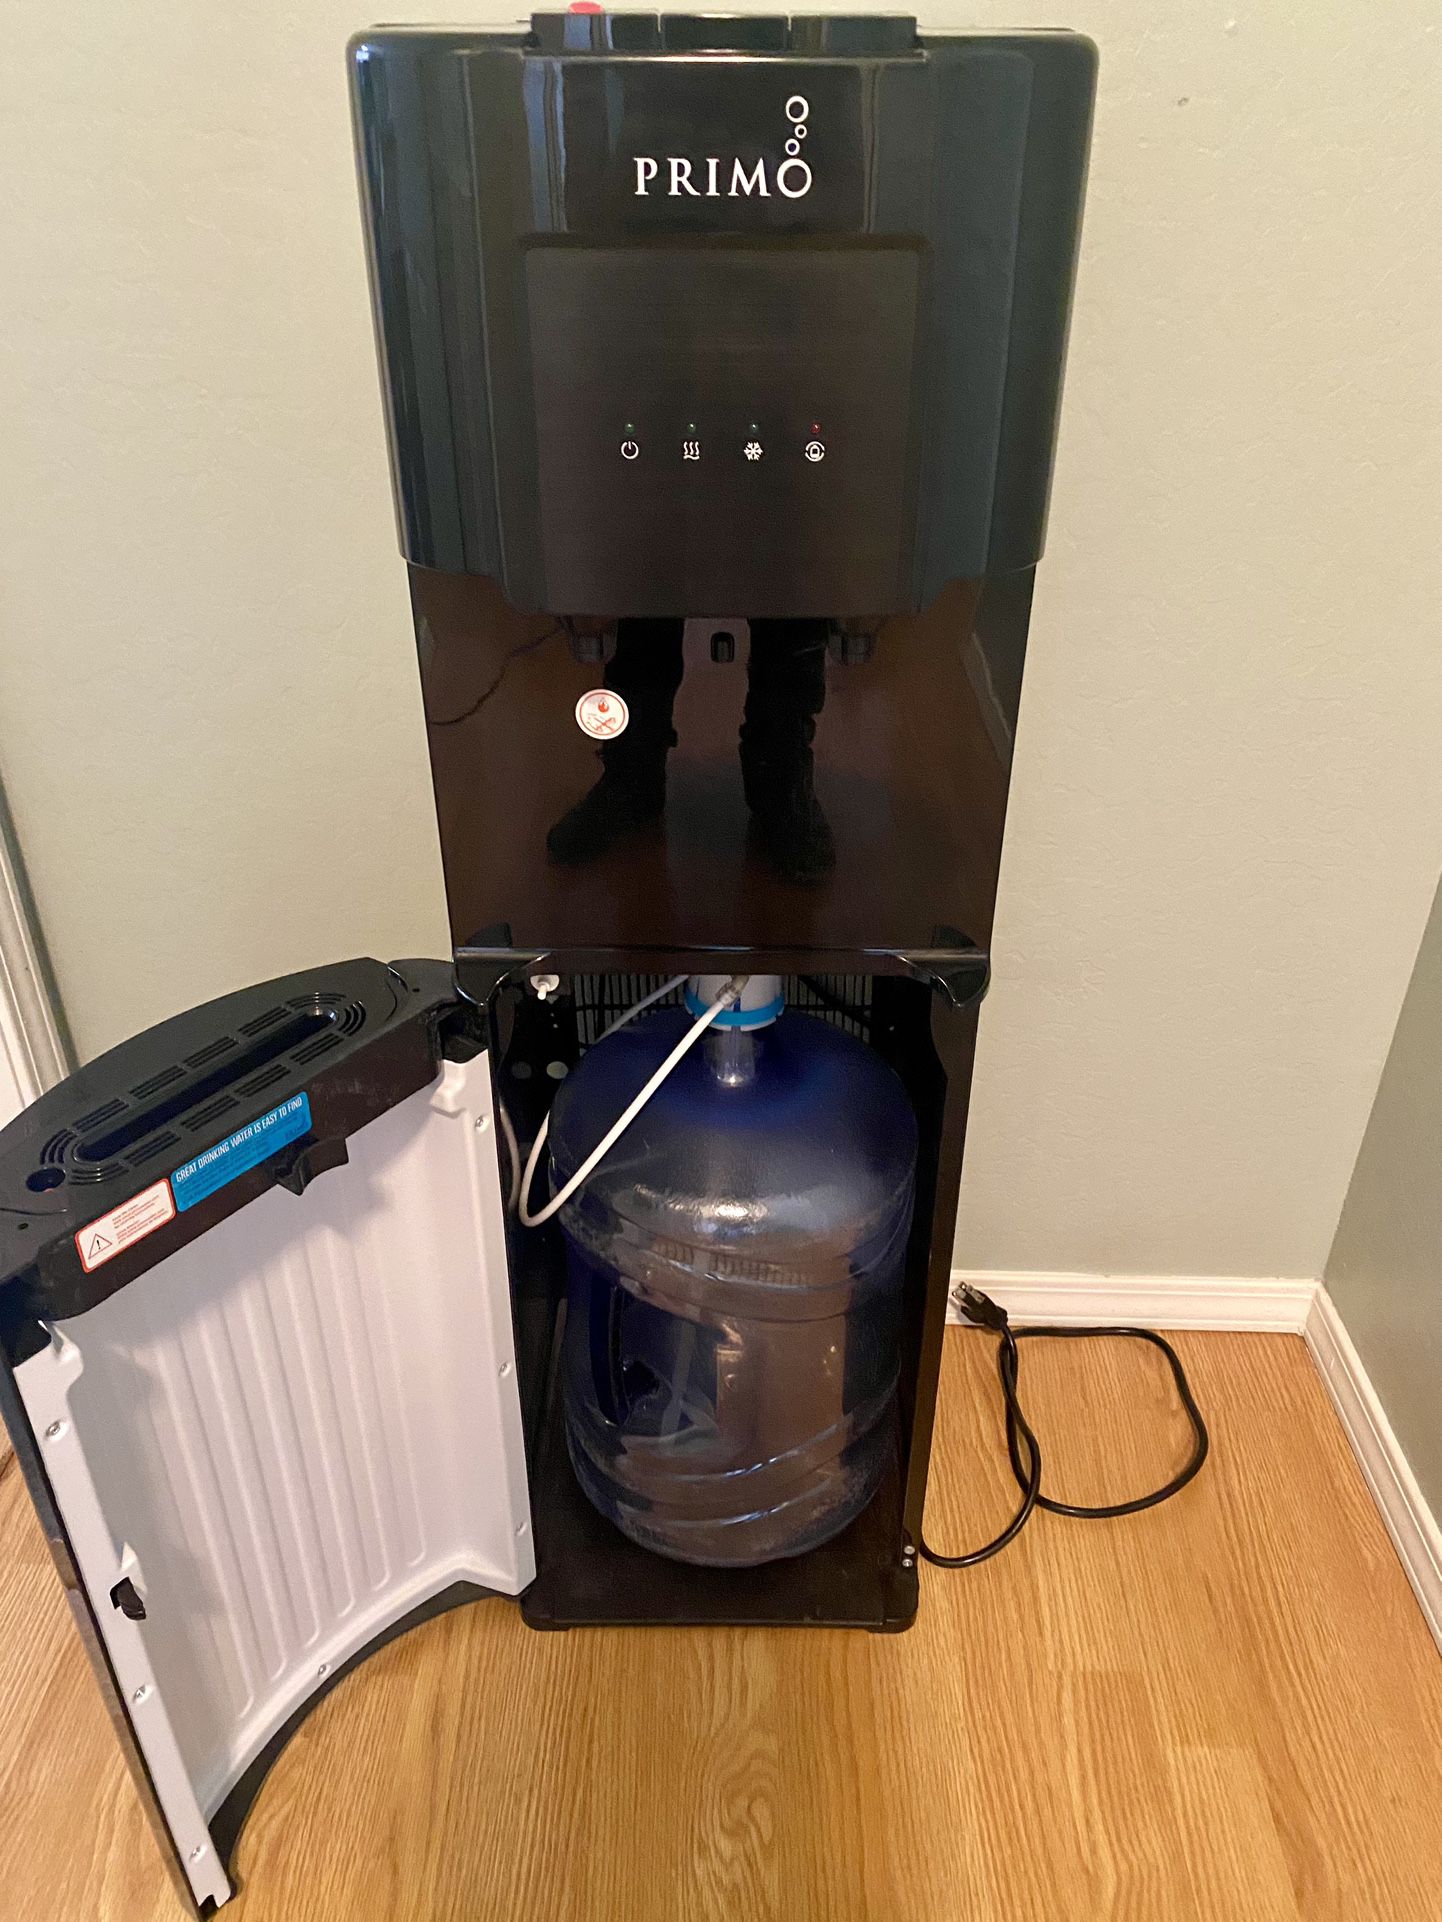 PRIMO Hot & Cold Water Dispenser